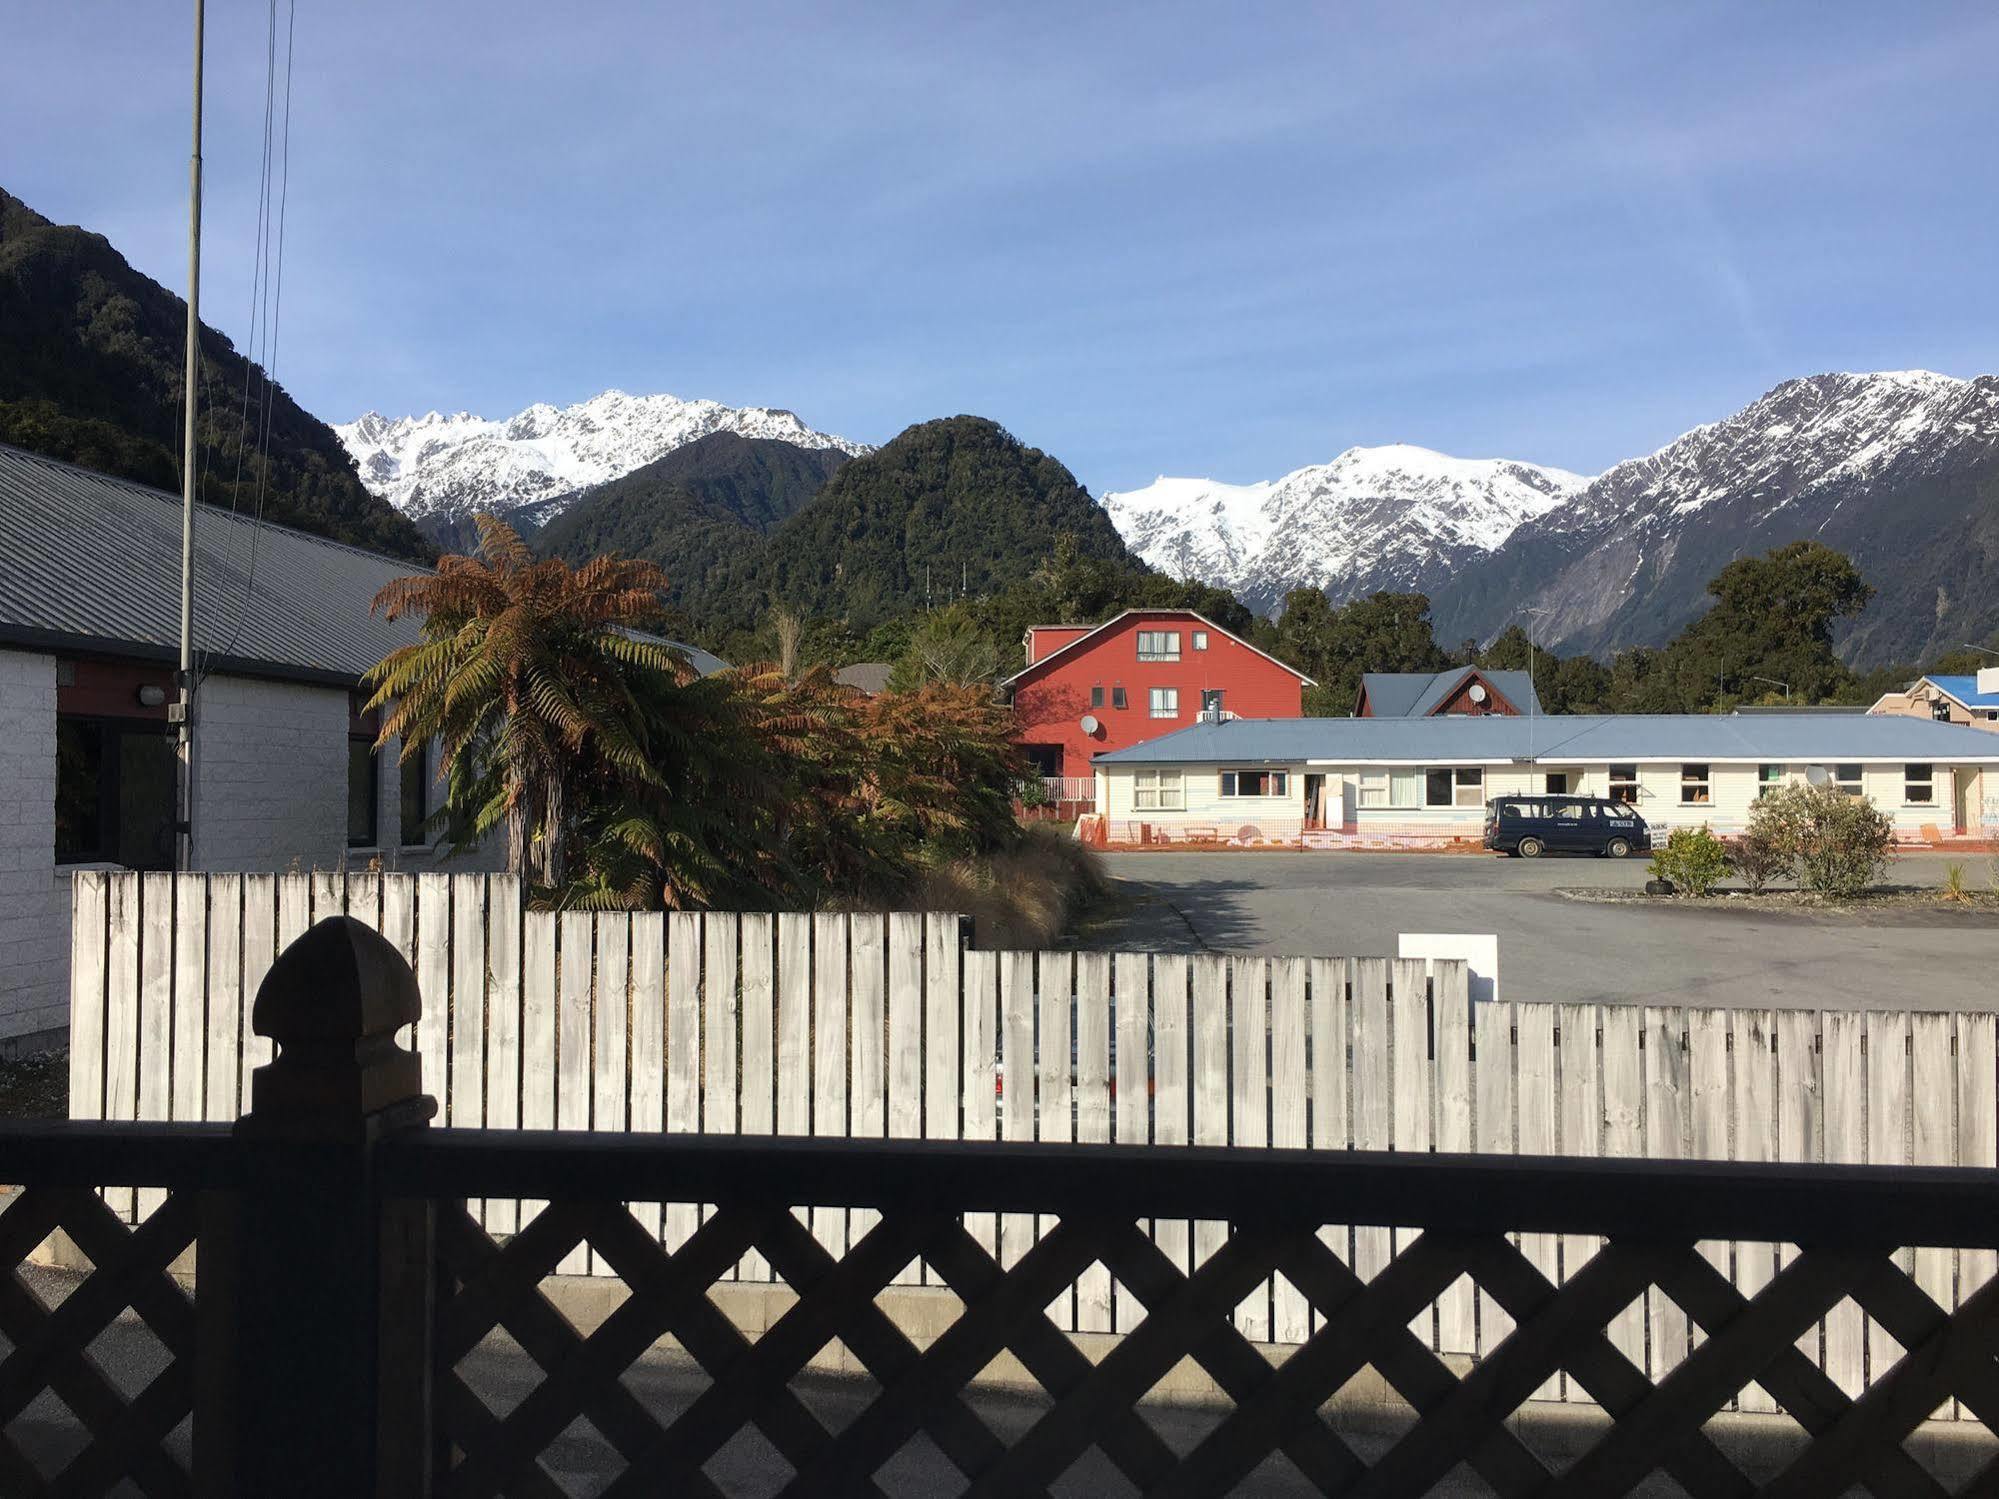 Alpine Glacier Motel Franz Josef Exterior photo